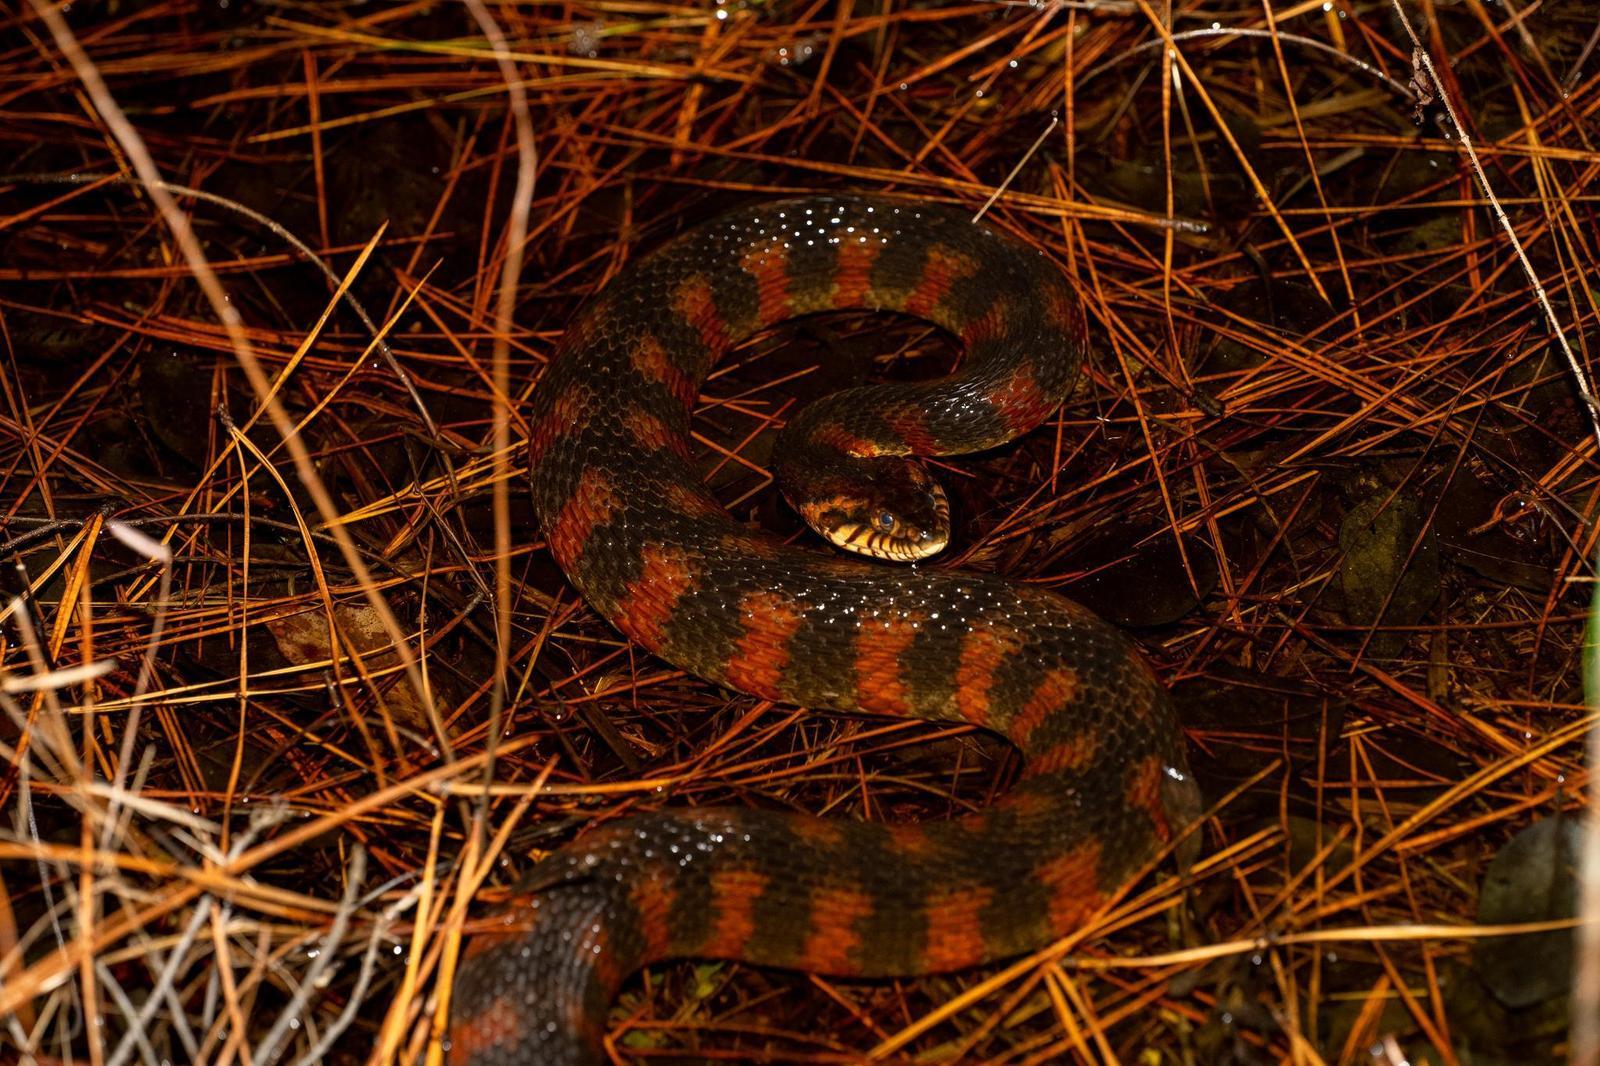 Southern Water Snake Photo by Jacob Zadik